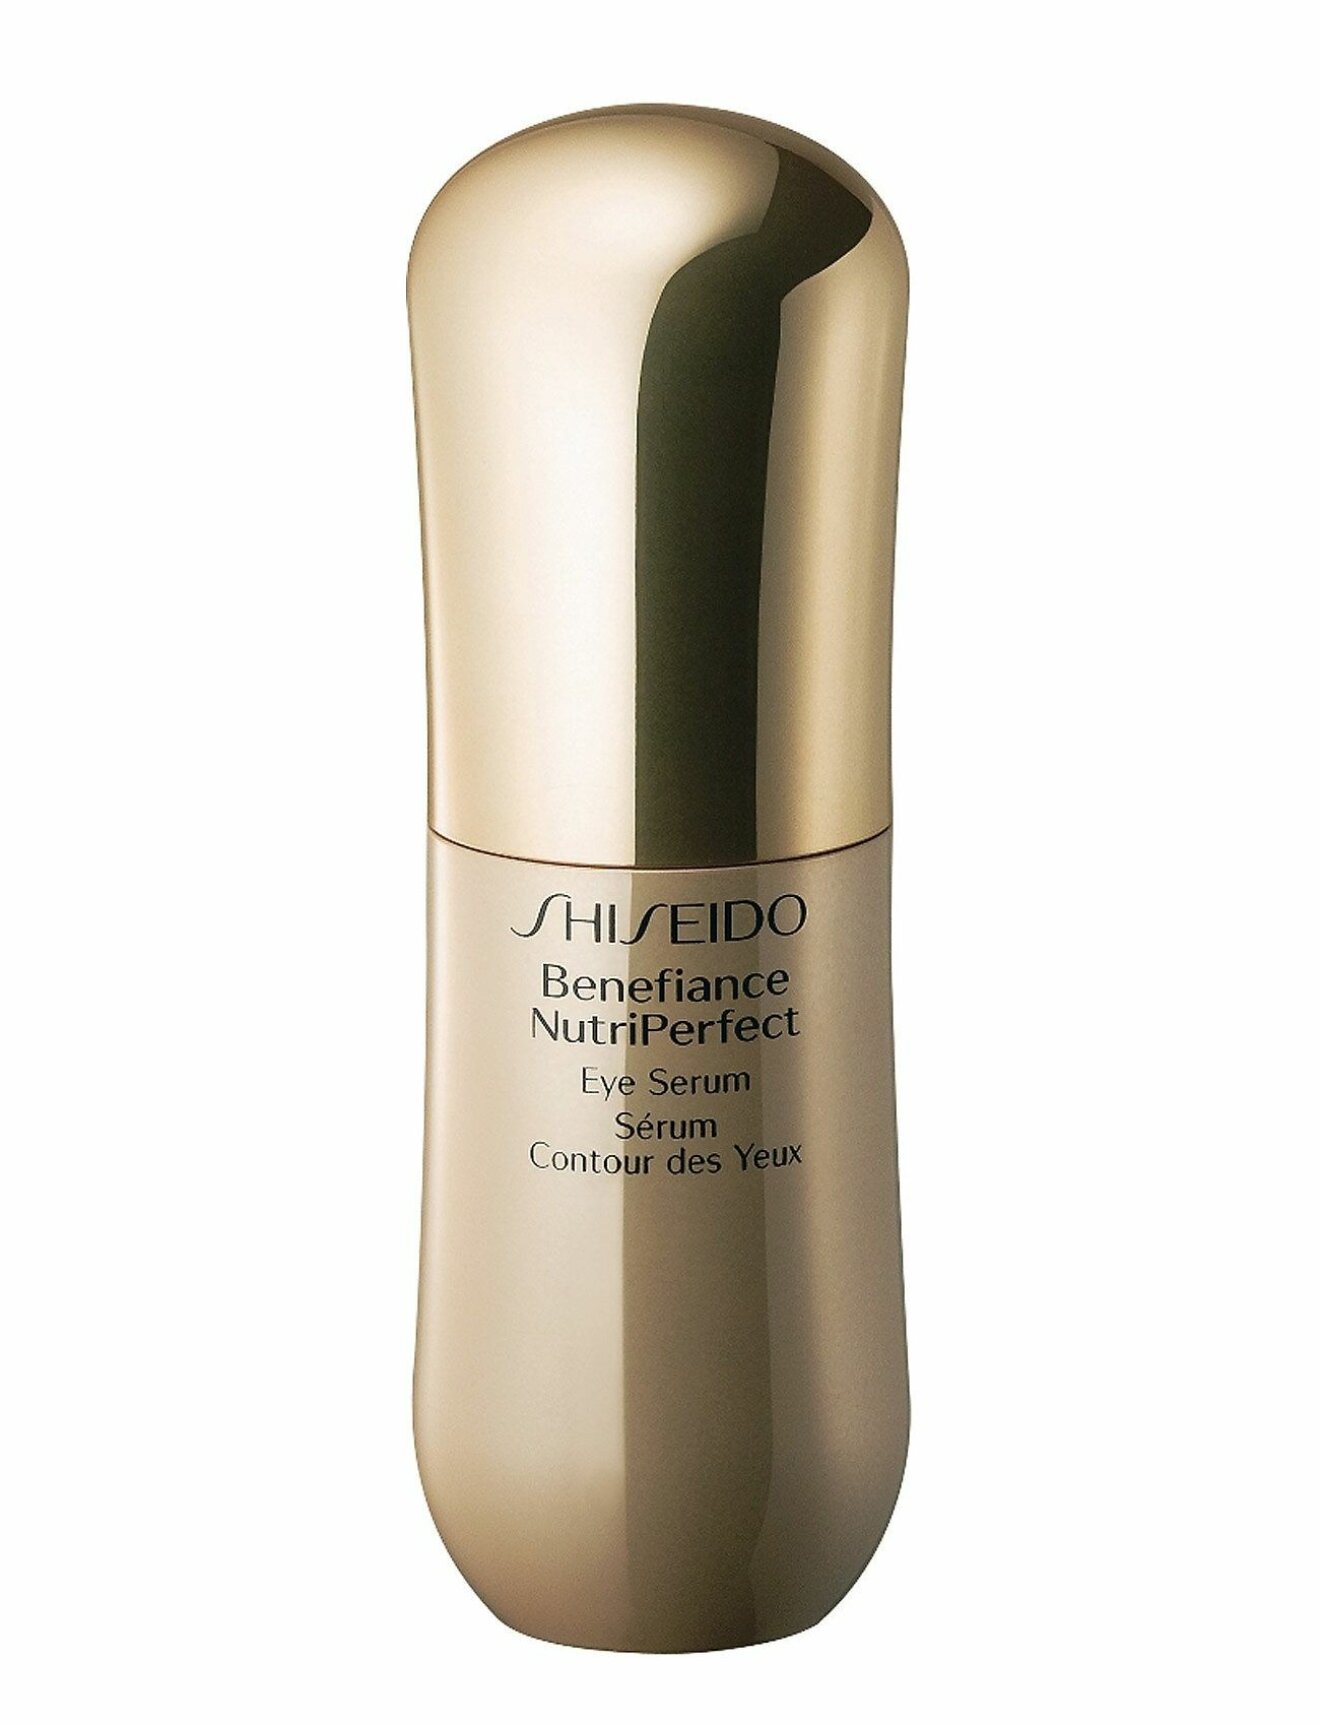 Benefiance nutri perfect eye serum från Shiseido.